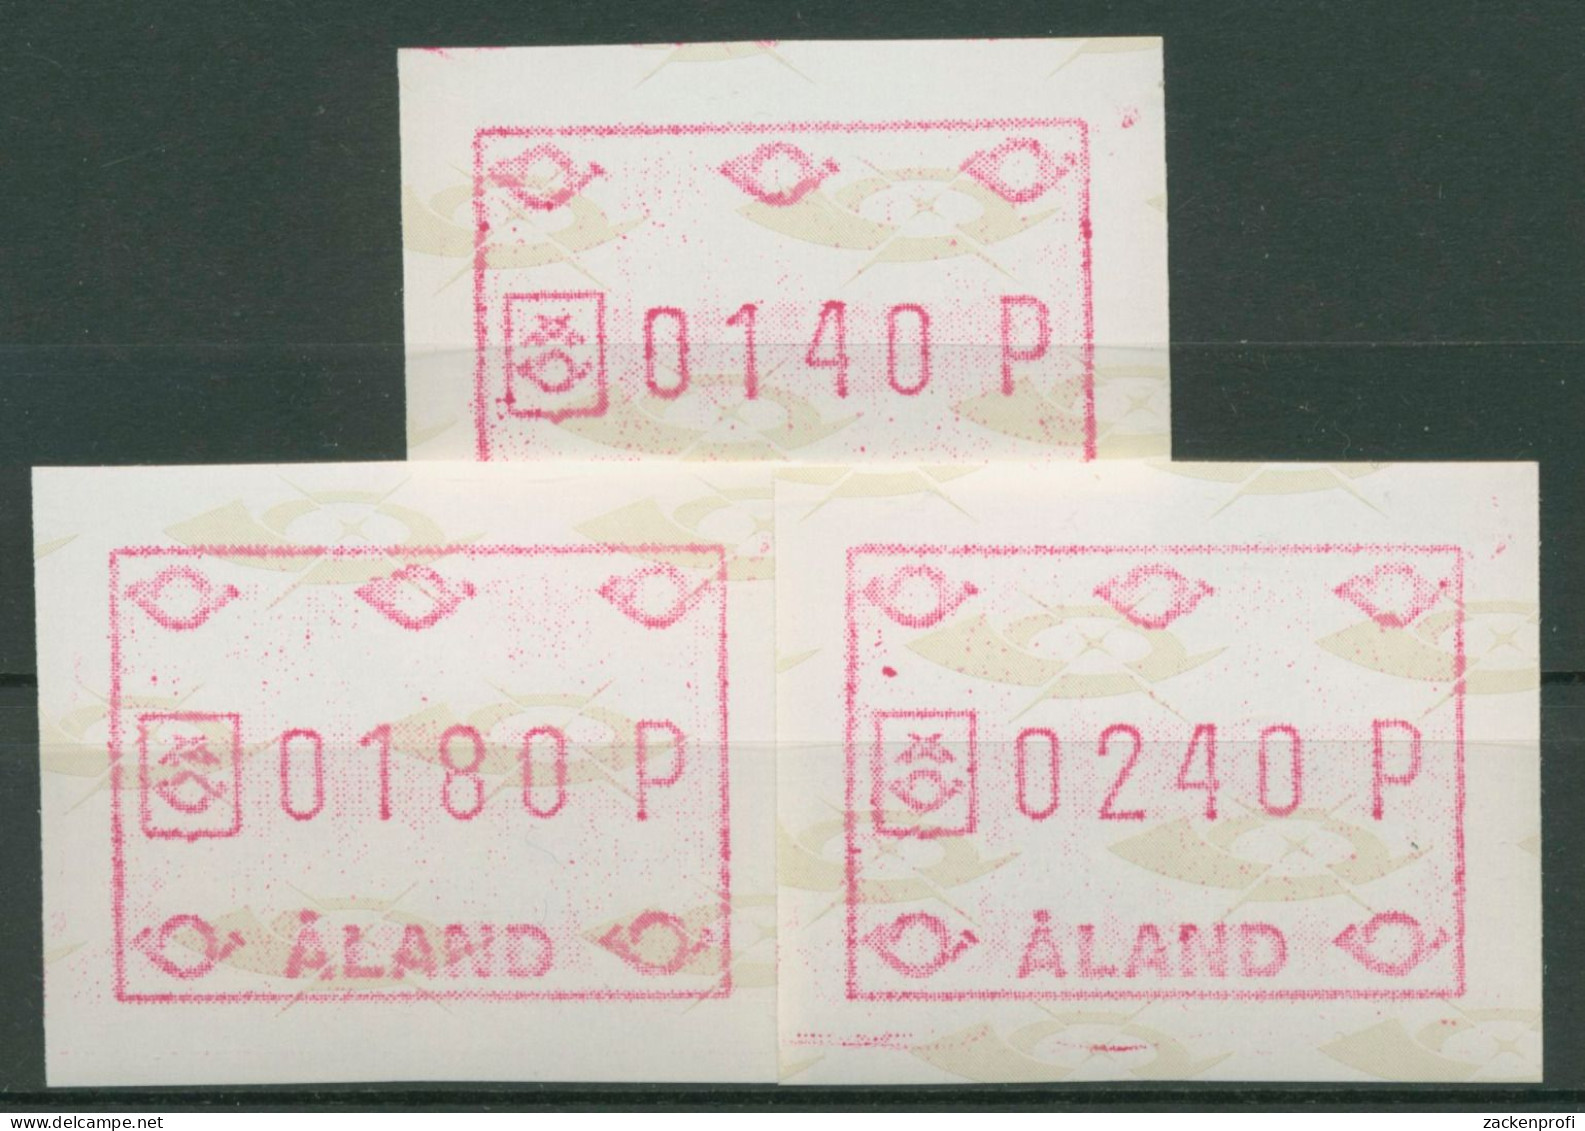 Aland 1988 ATM Große Posthörner Satz 3 Werte ATM 2 S 1 Postfrisch - Aland